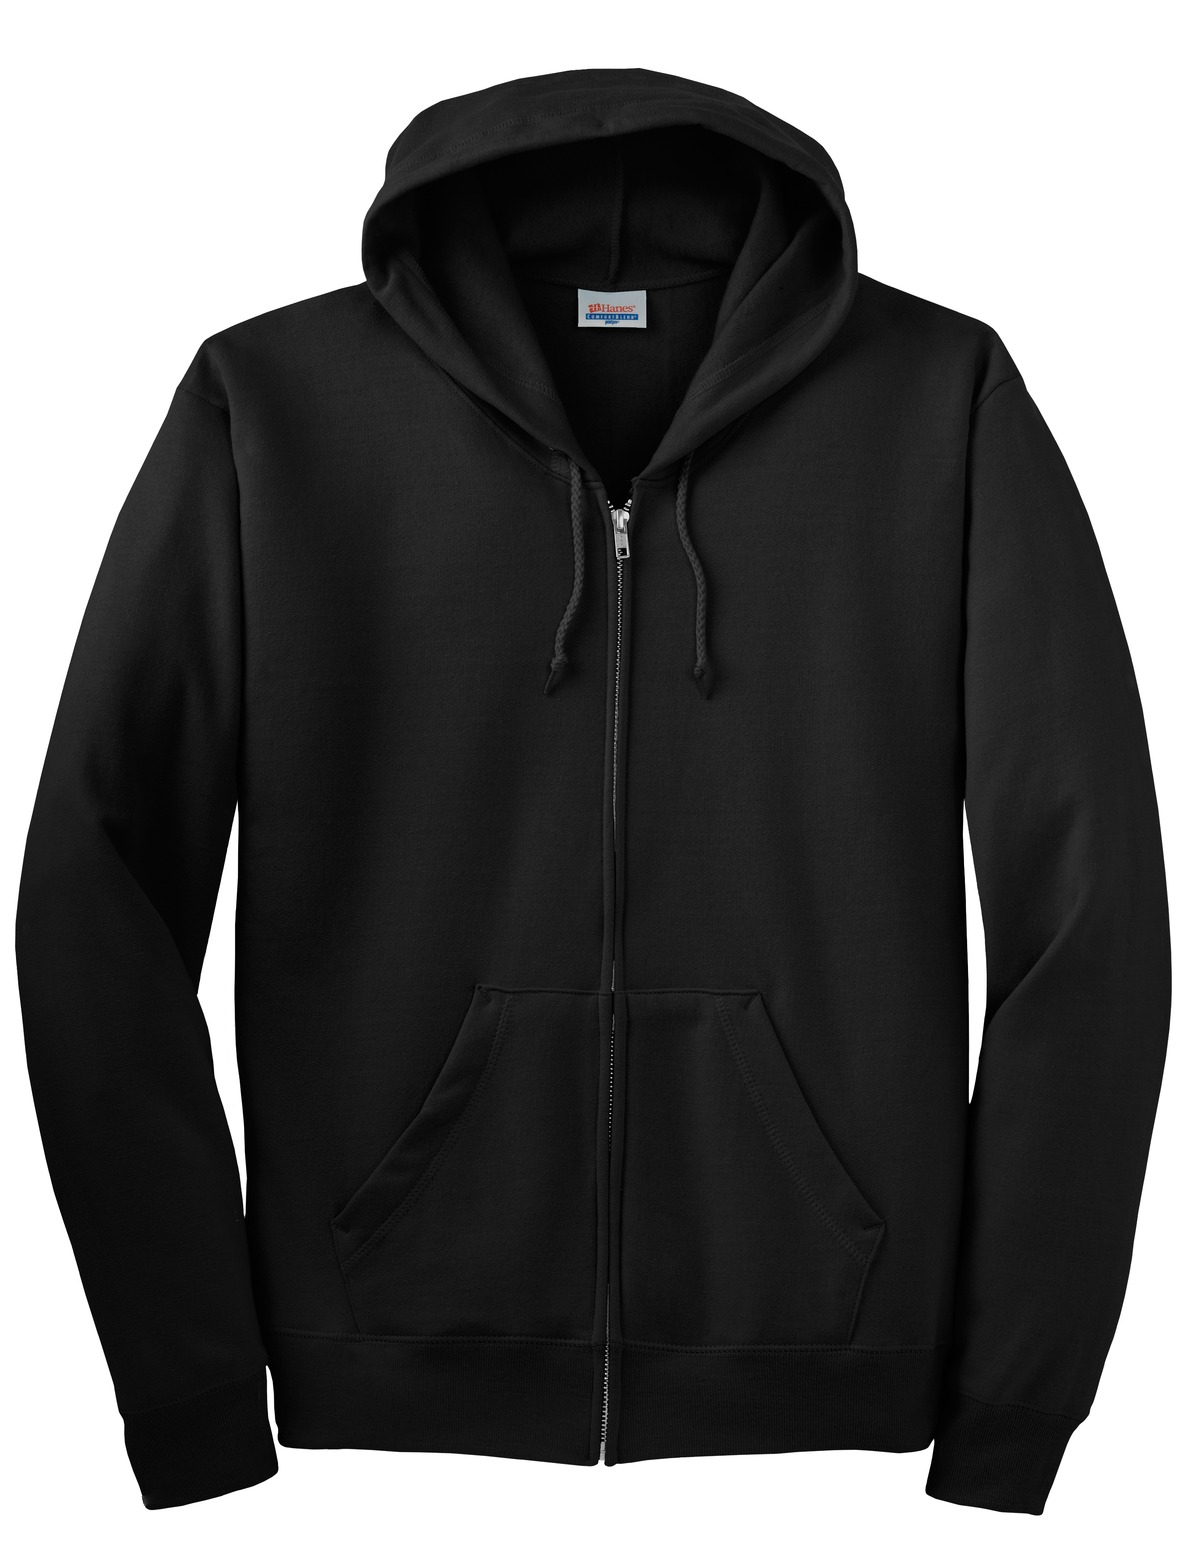 Hanes – EcoSmart Full-Zip Hooded Sweatshirt. P180 – Dynasty Custom